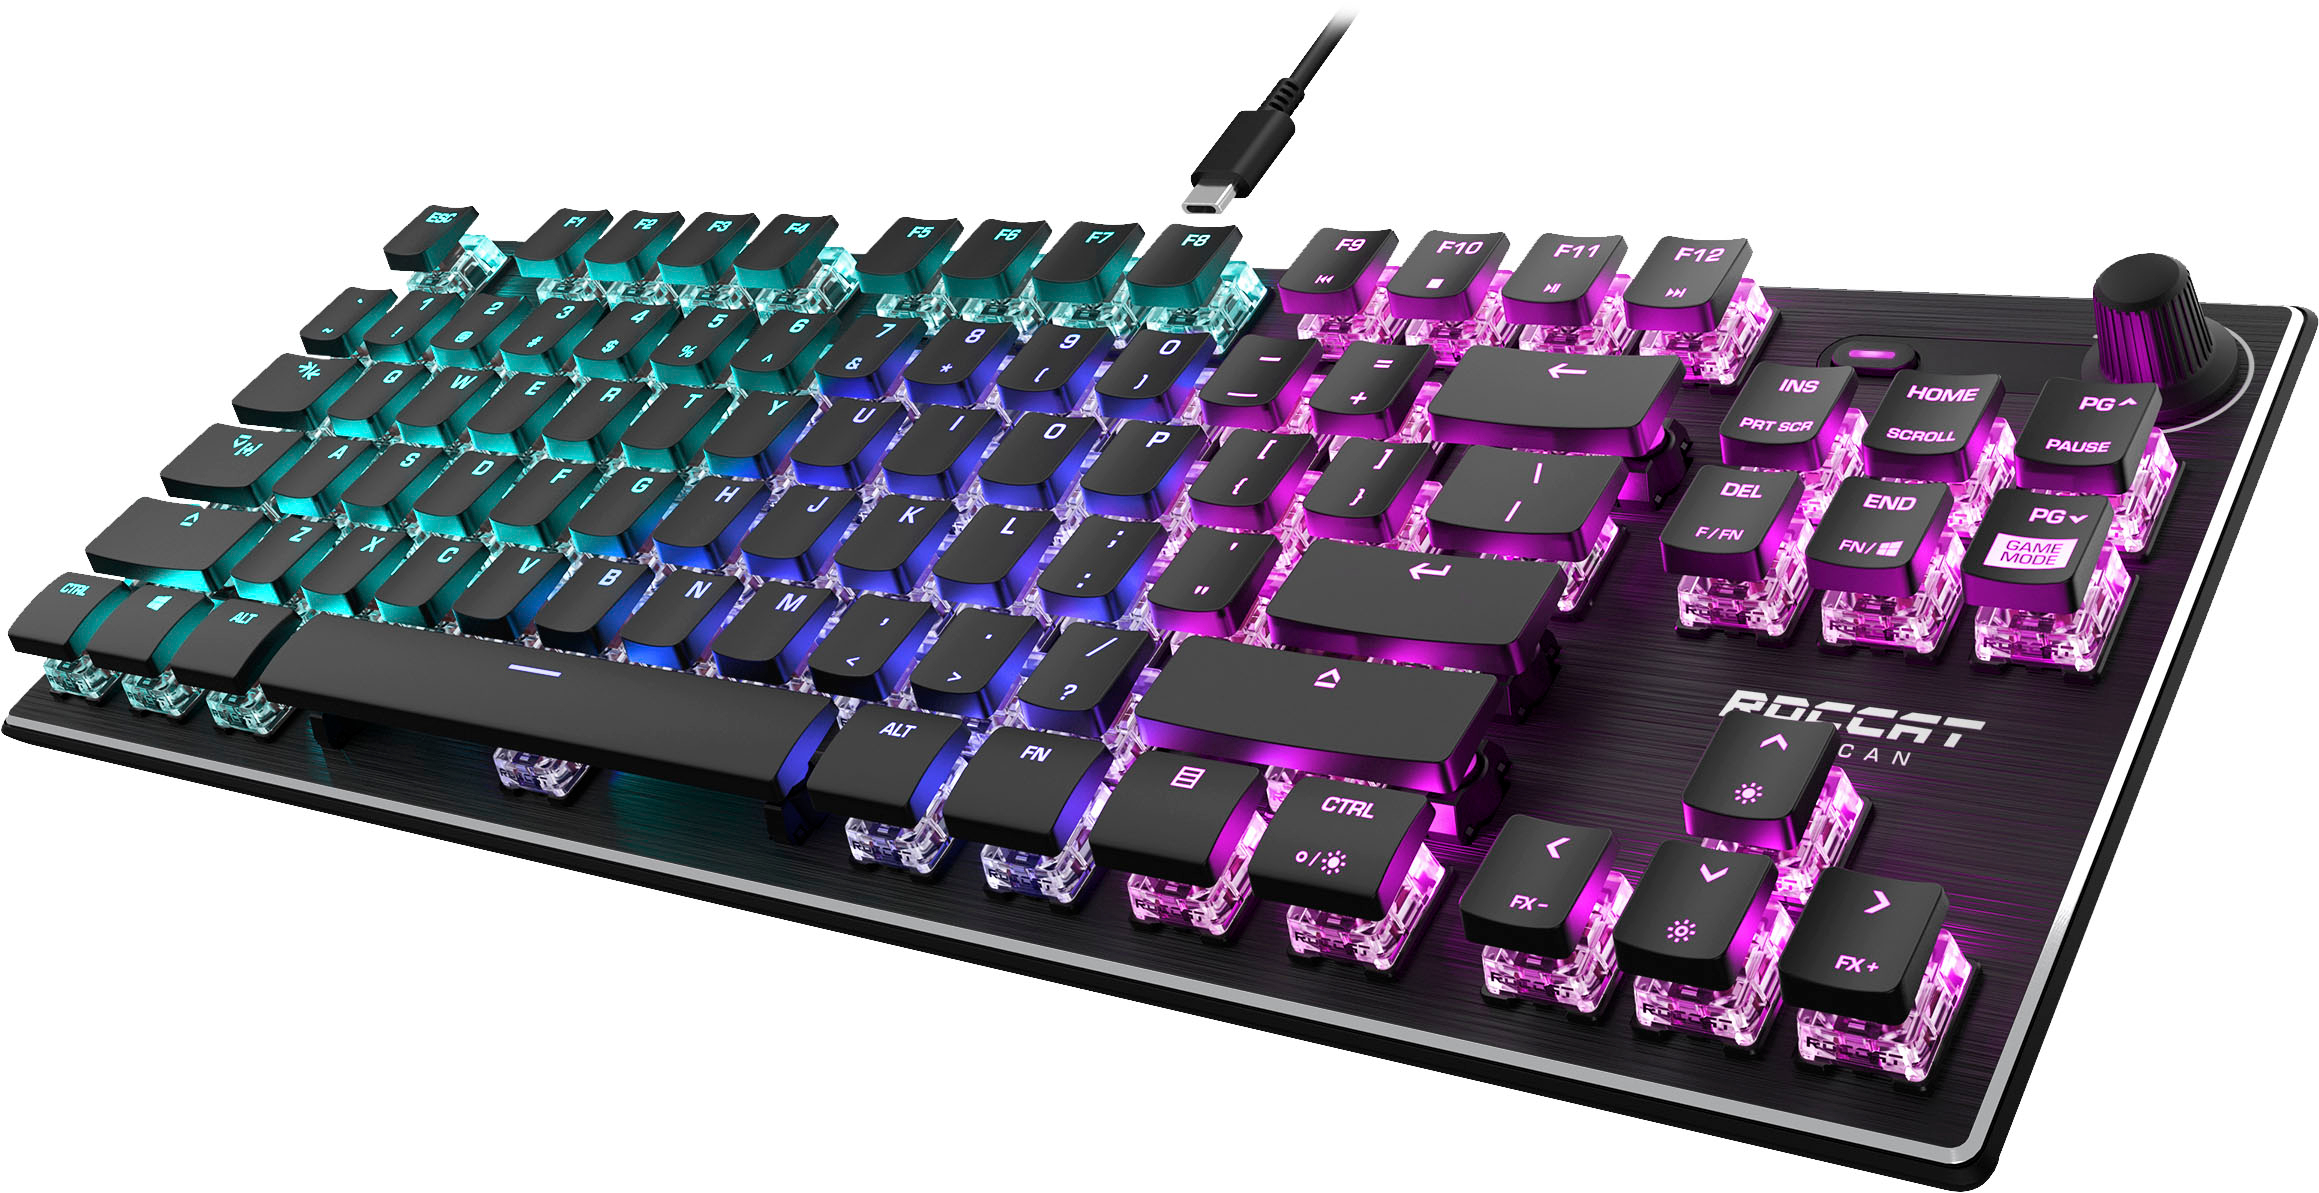 Best Gaming Keyboard Is RPM Euro Gaming Keyboard Under 1000rs